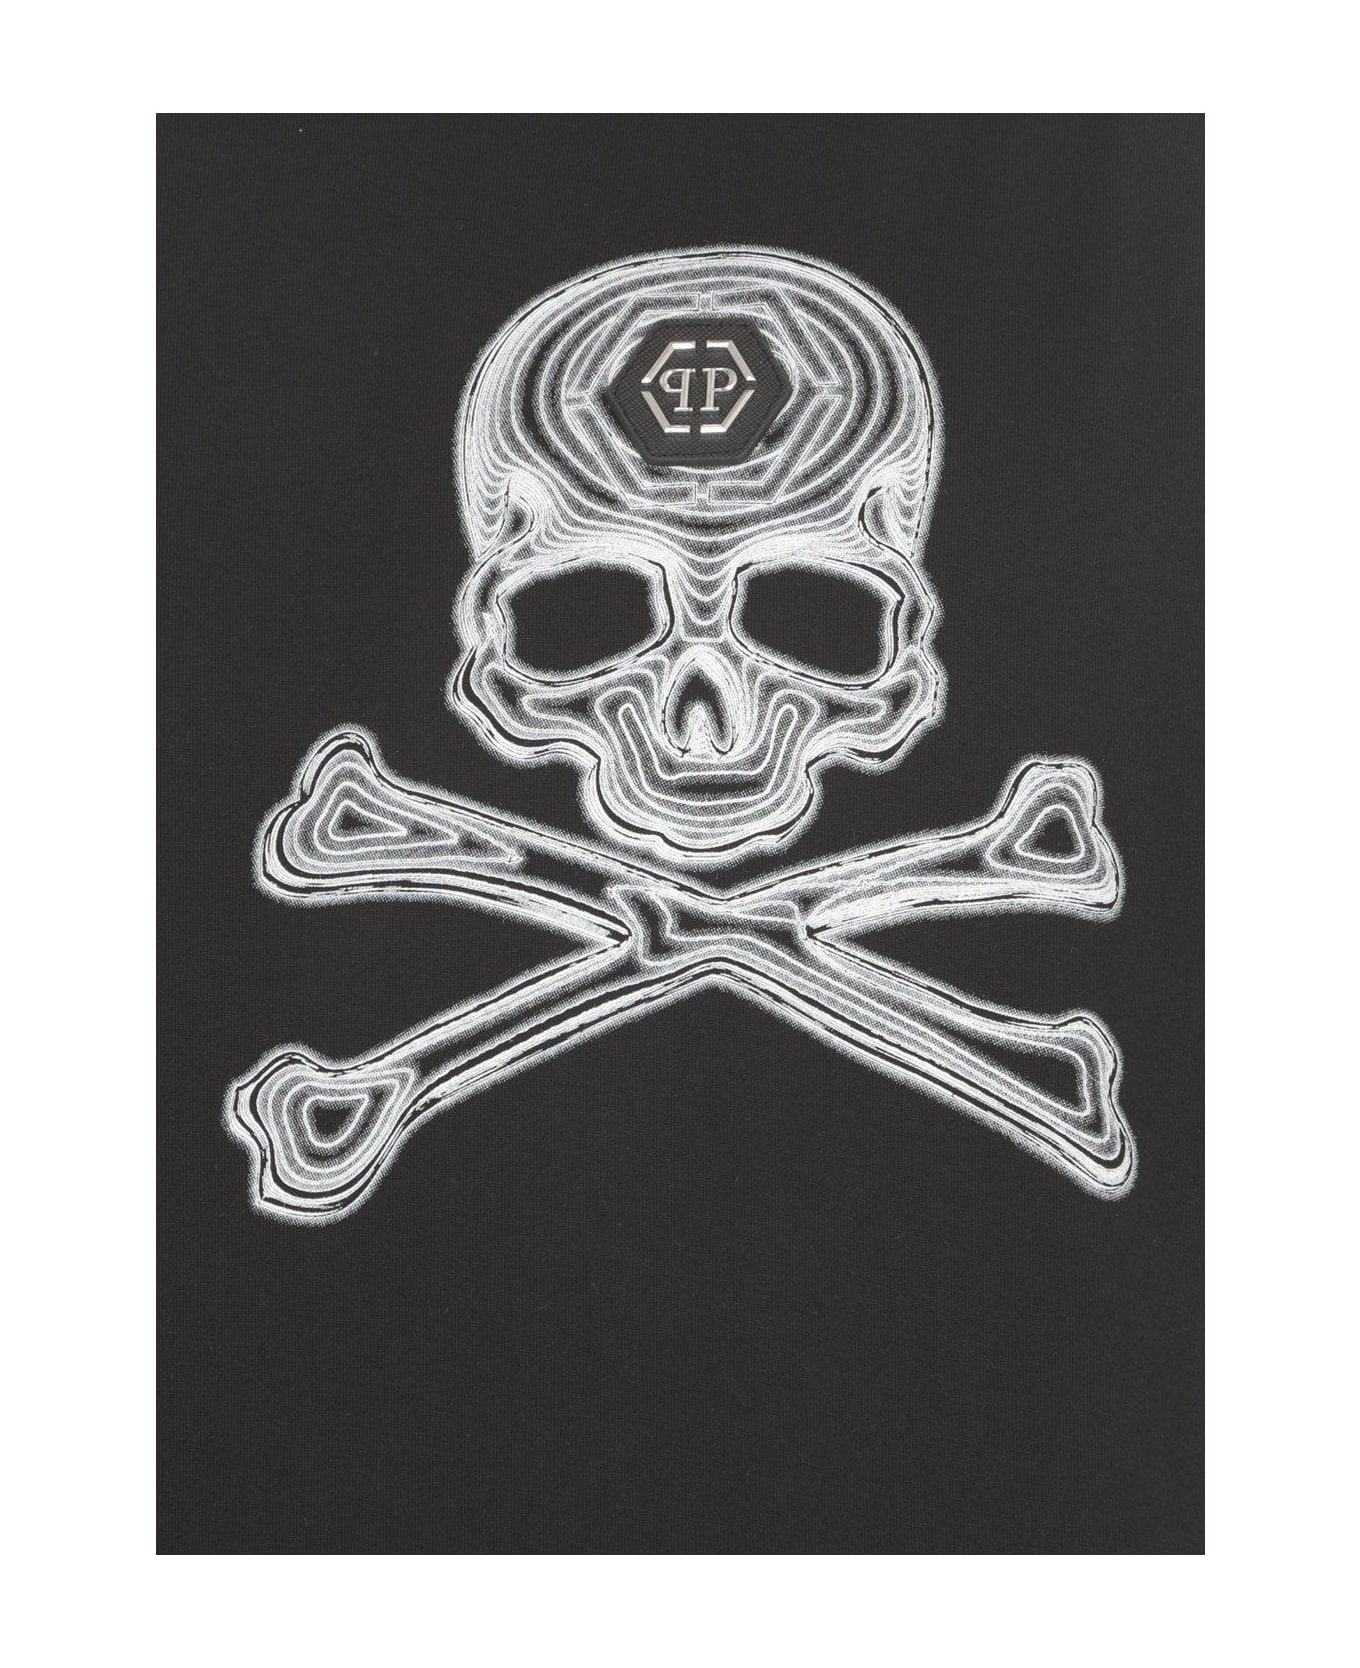 Philipp Plein Skull Bone Printed Crewneck T-shirt - Black